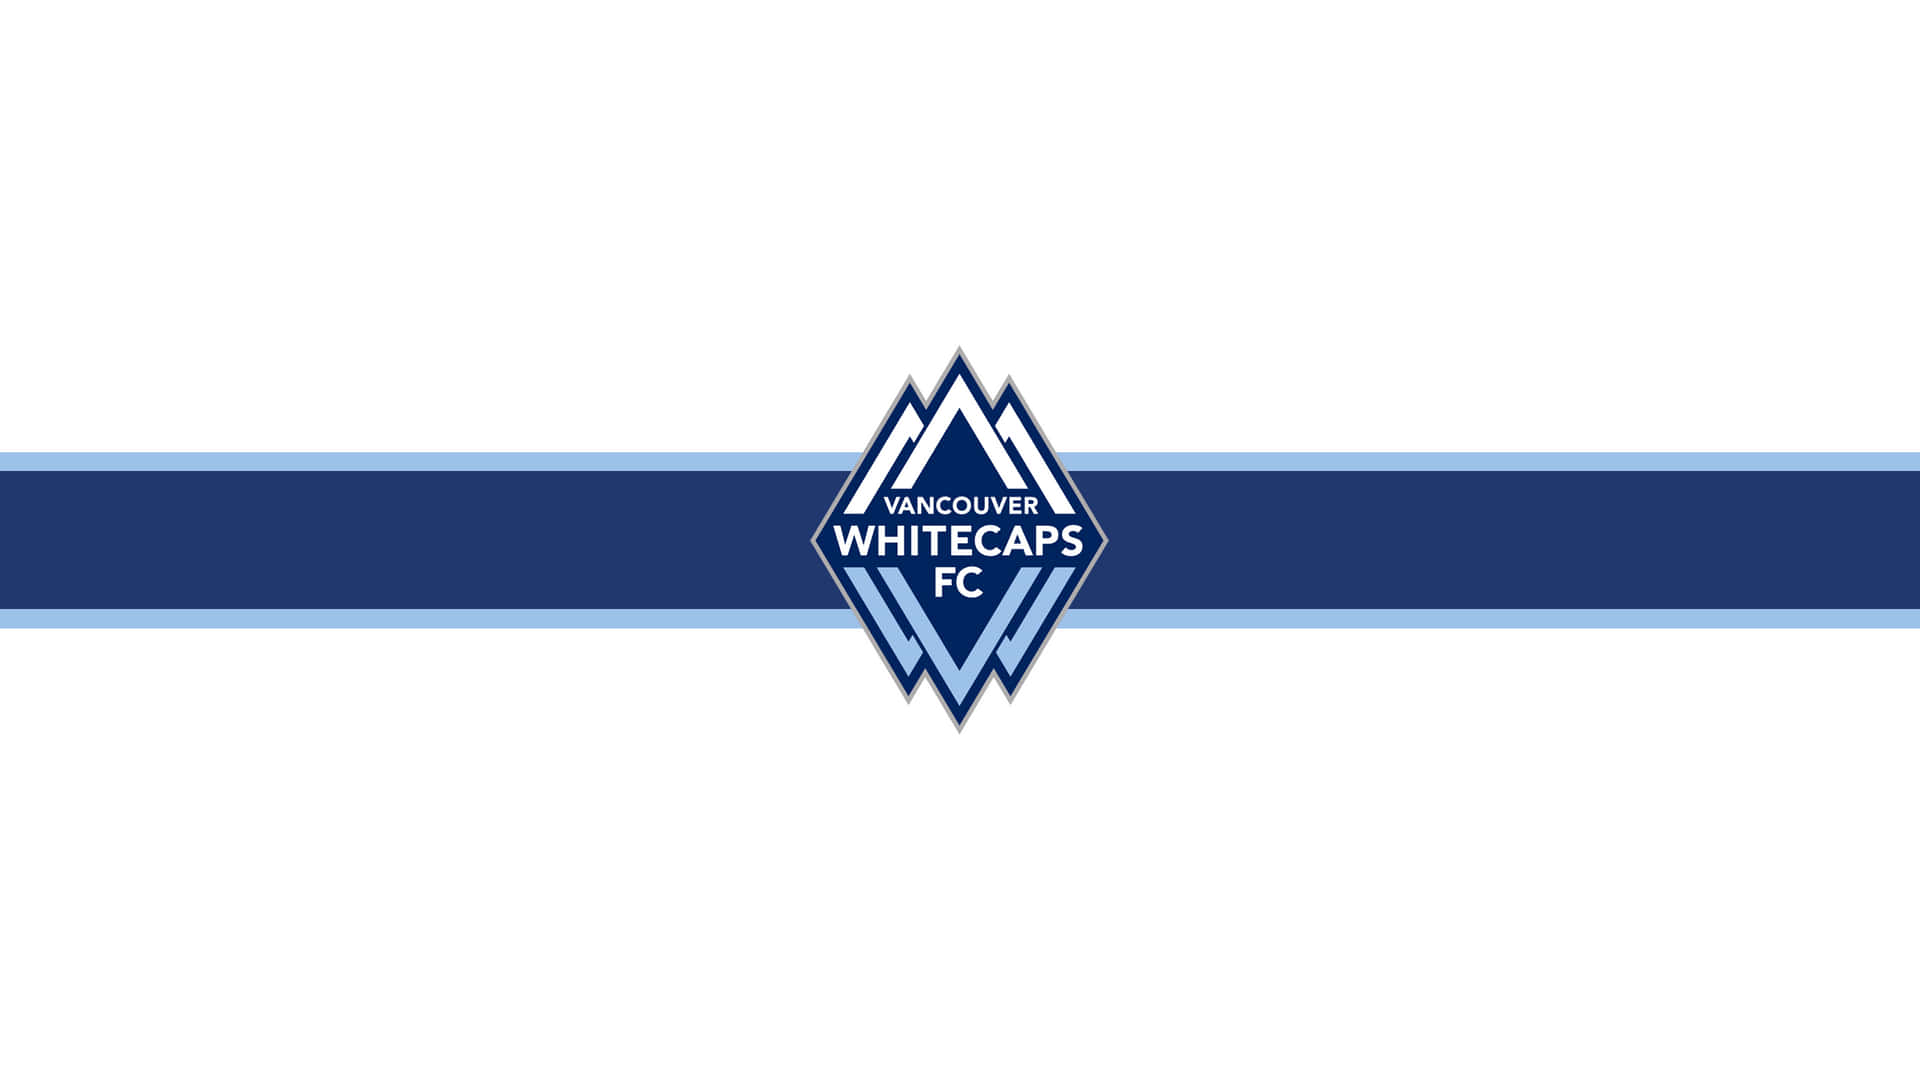 Papelde Parede Estiloso Do Logo Da Equipe Vancouver Whitecaps Fc. Papel de Parede